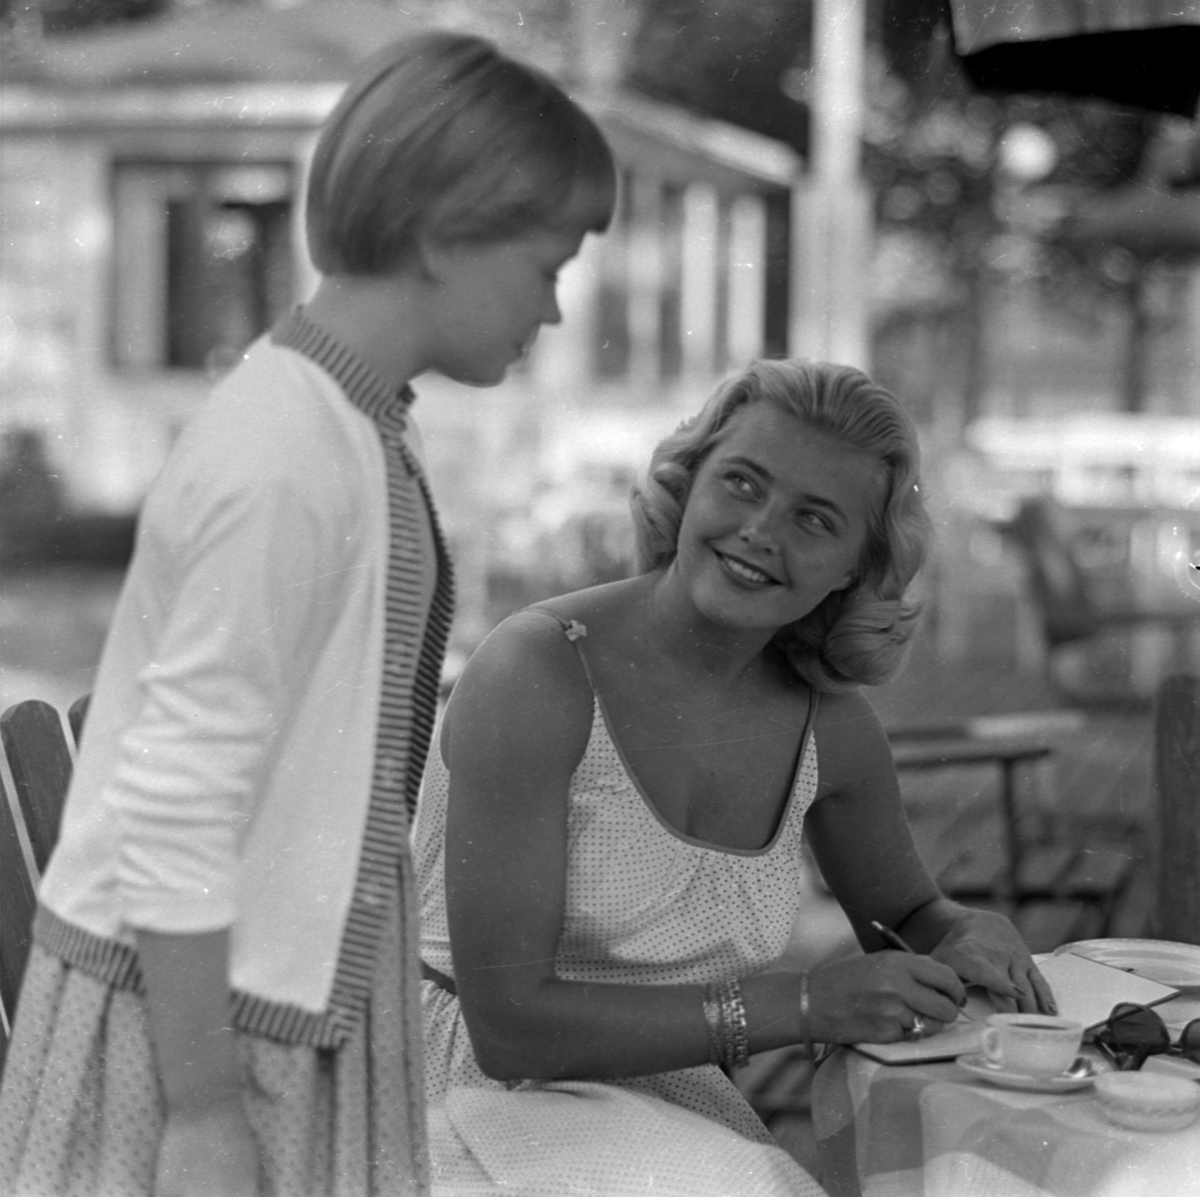 Miss Universum, Hillevi Rombin, skriver autograf på uteservering, Uppsala sommaren 1957